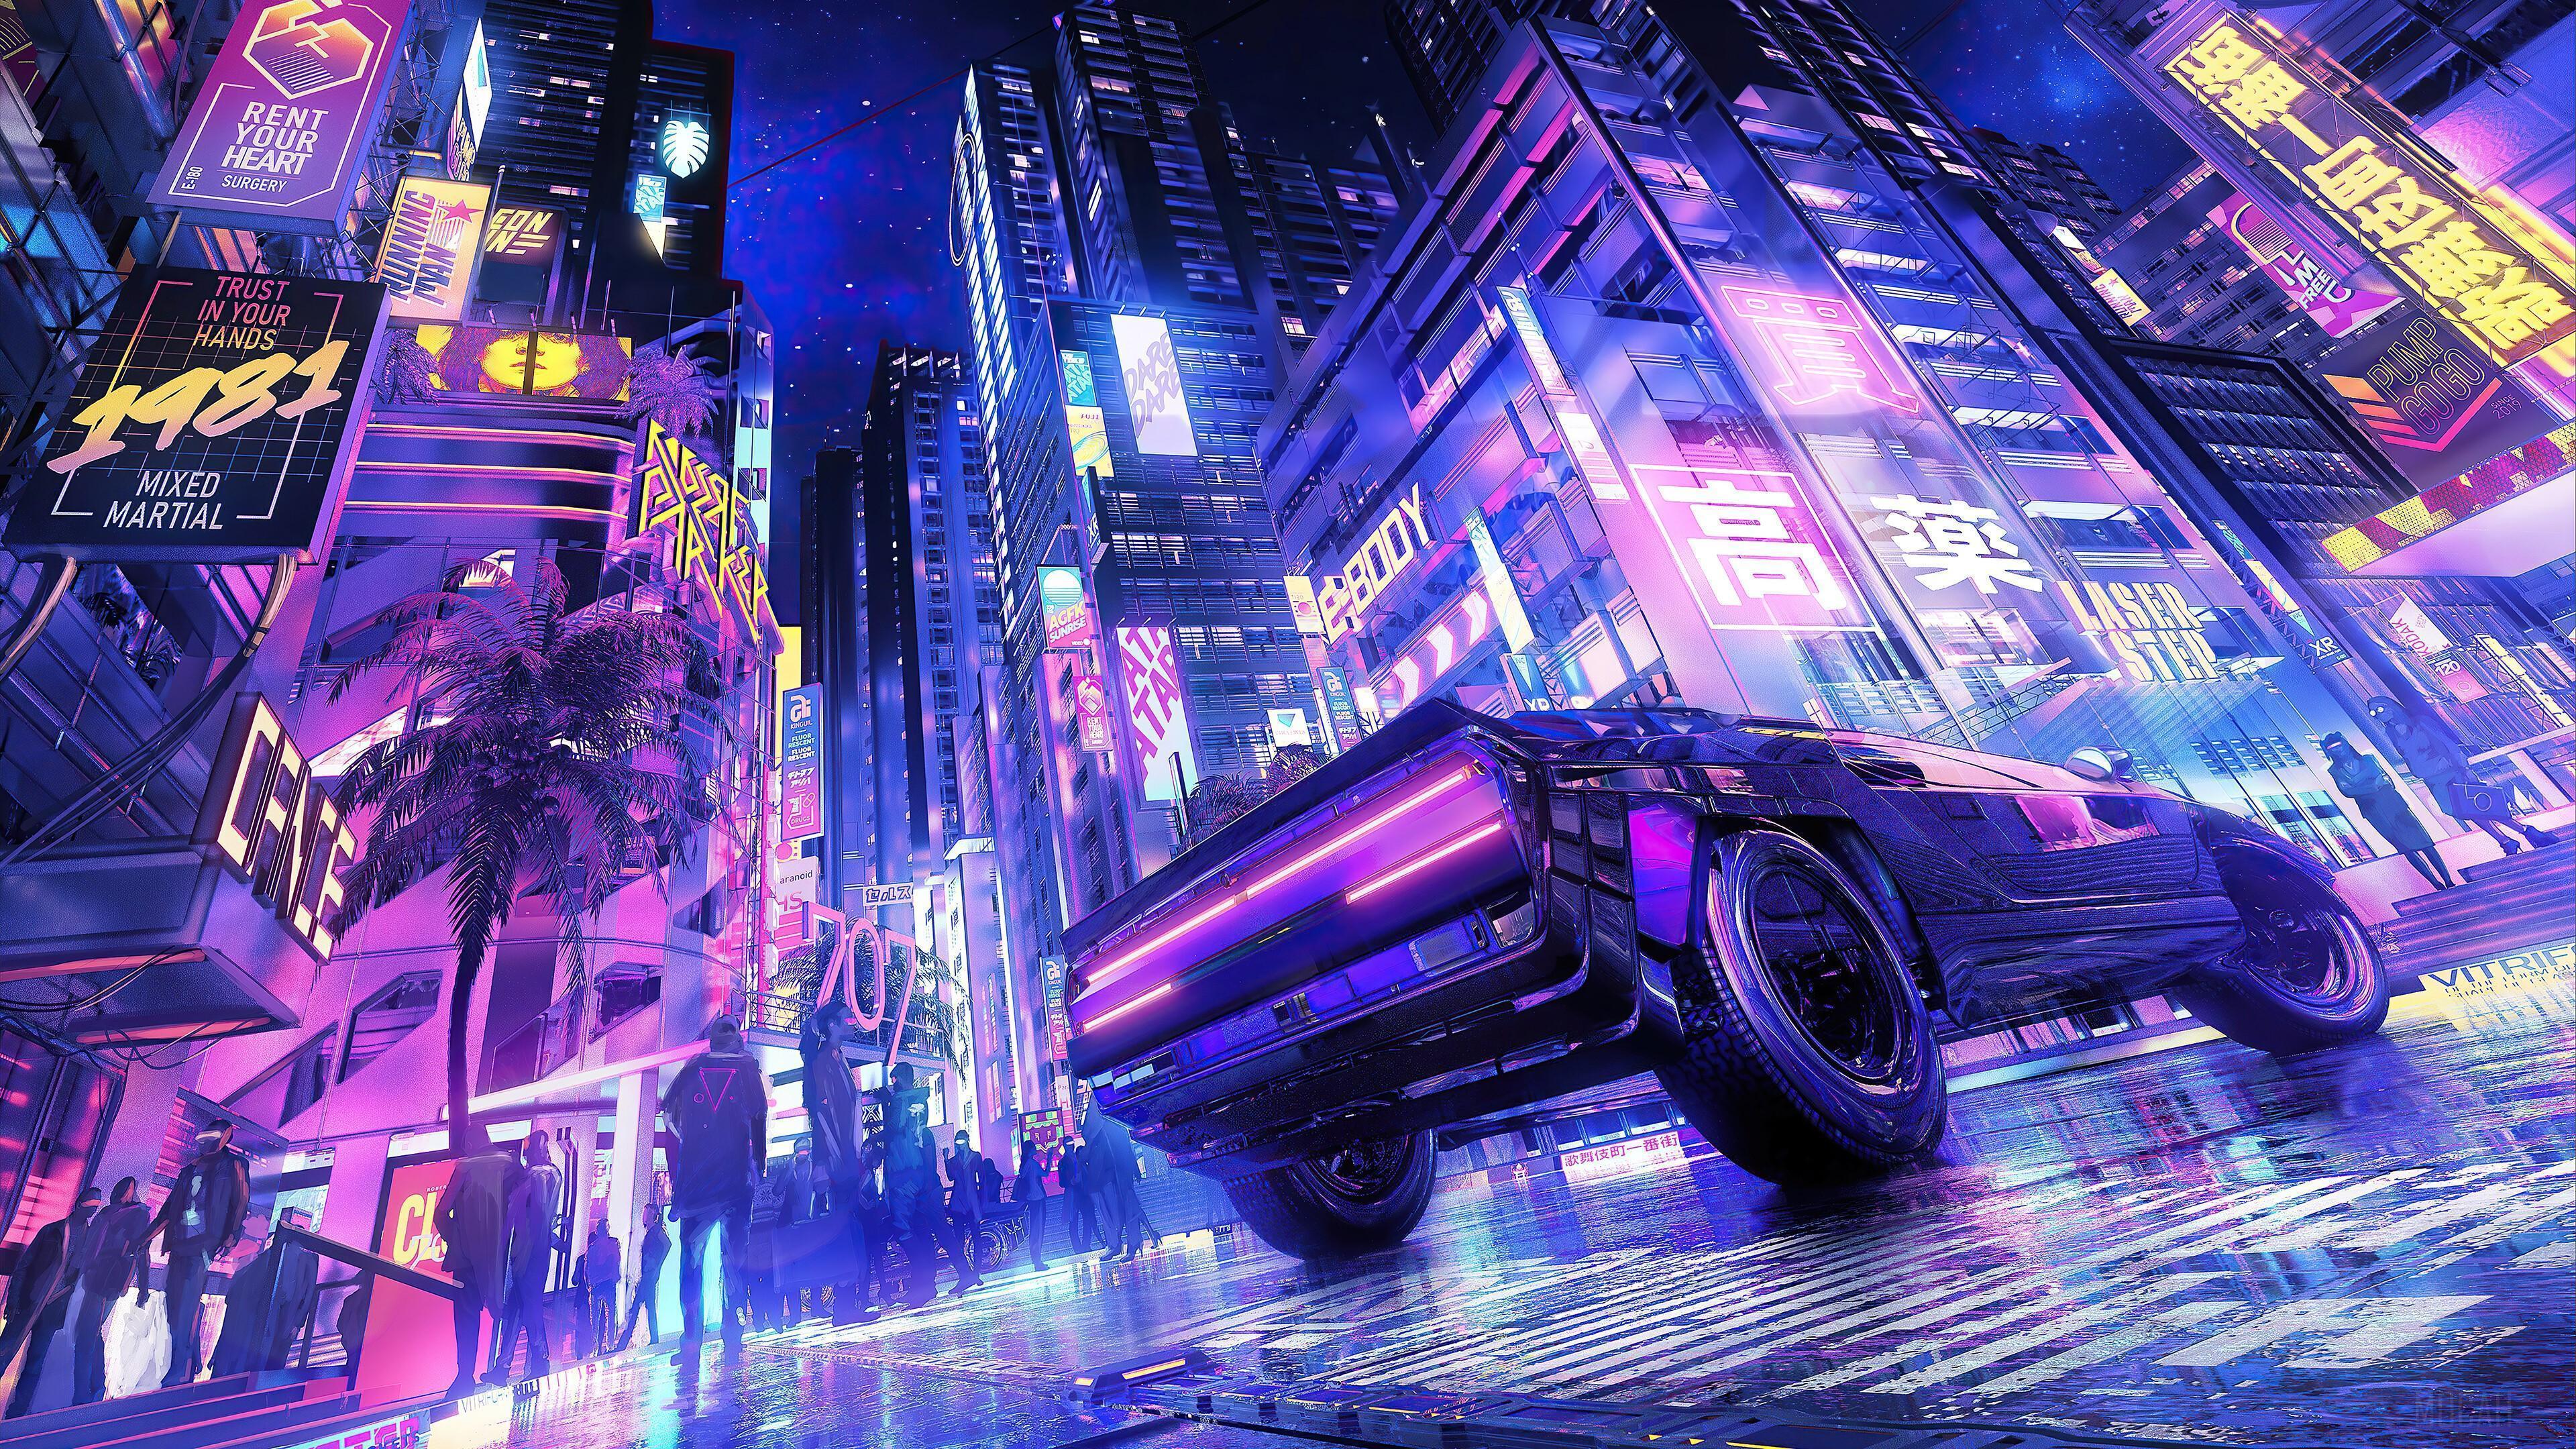 HD wallpaper, City, Night, Science Fiction, Digital Art 4K, Car, Sci Fi, Cyberpunk